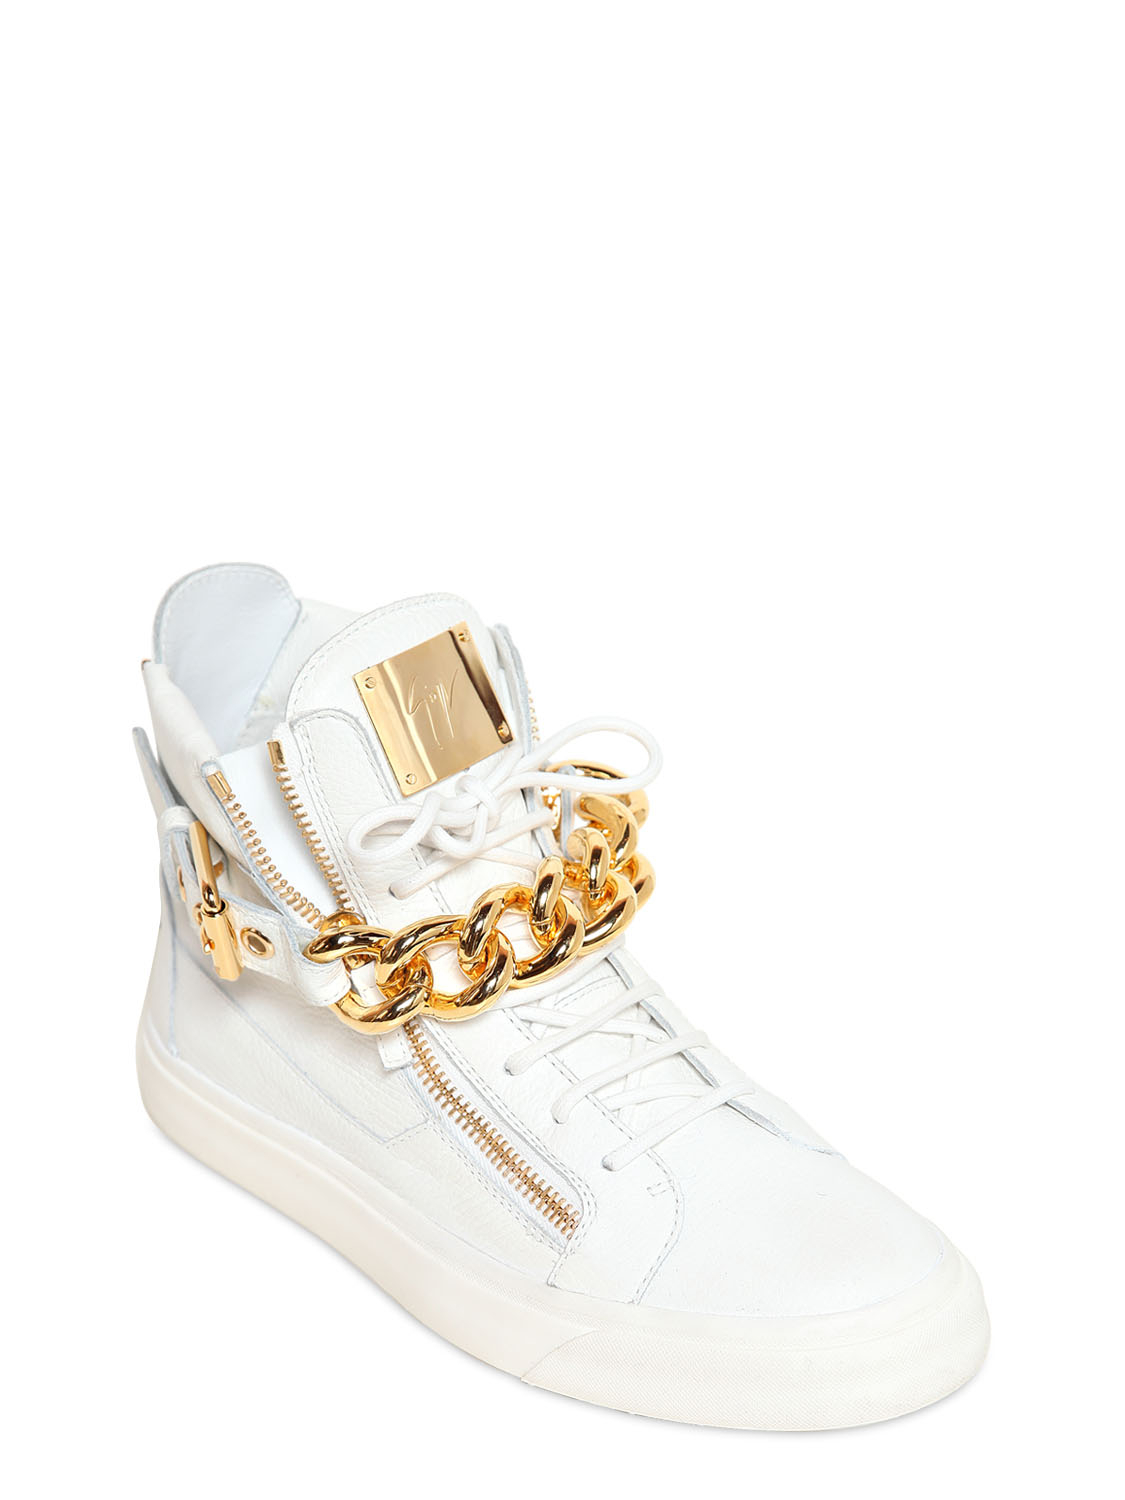 Giuseppe Zanotti Metal High Top Sneakers in White for Men | Lyst